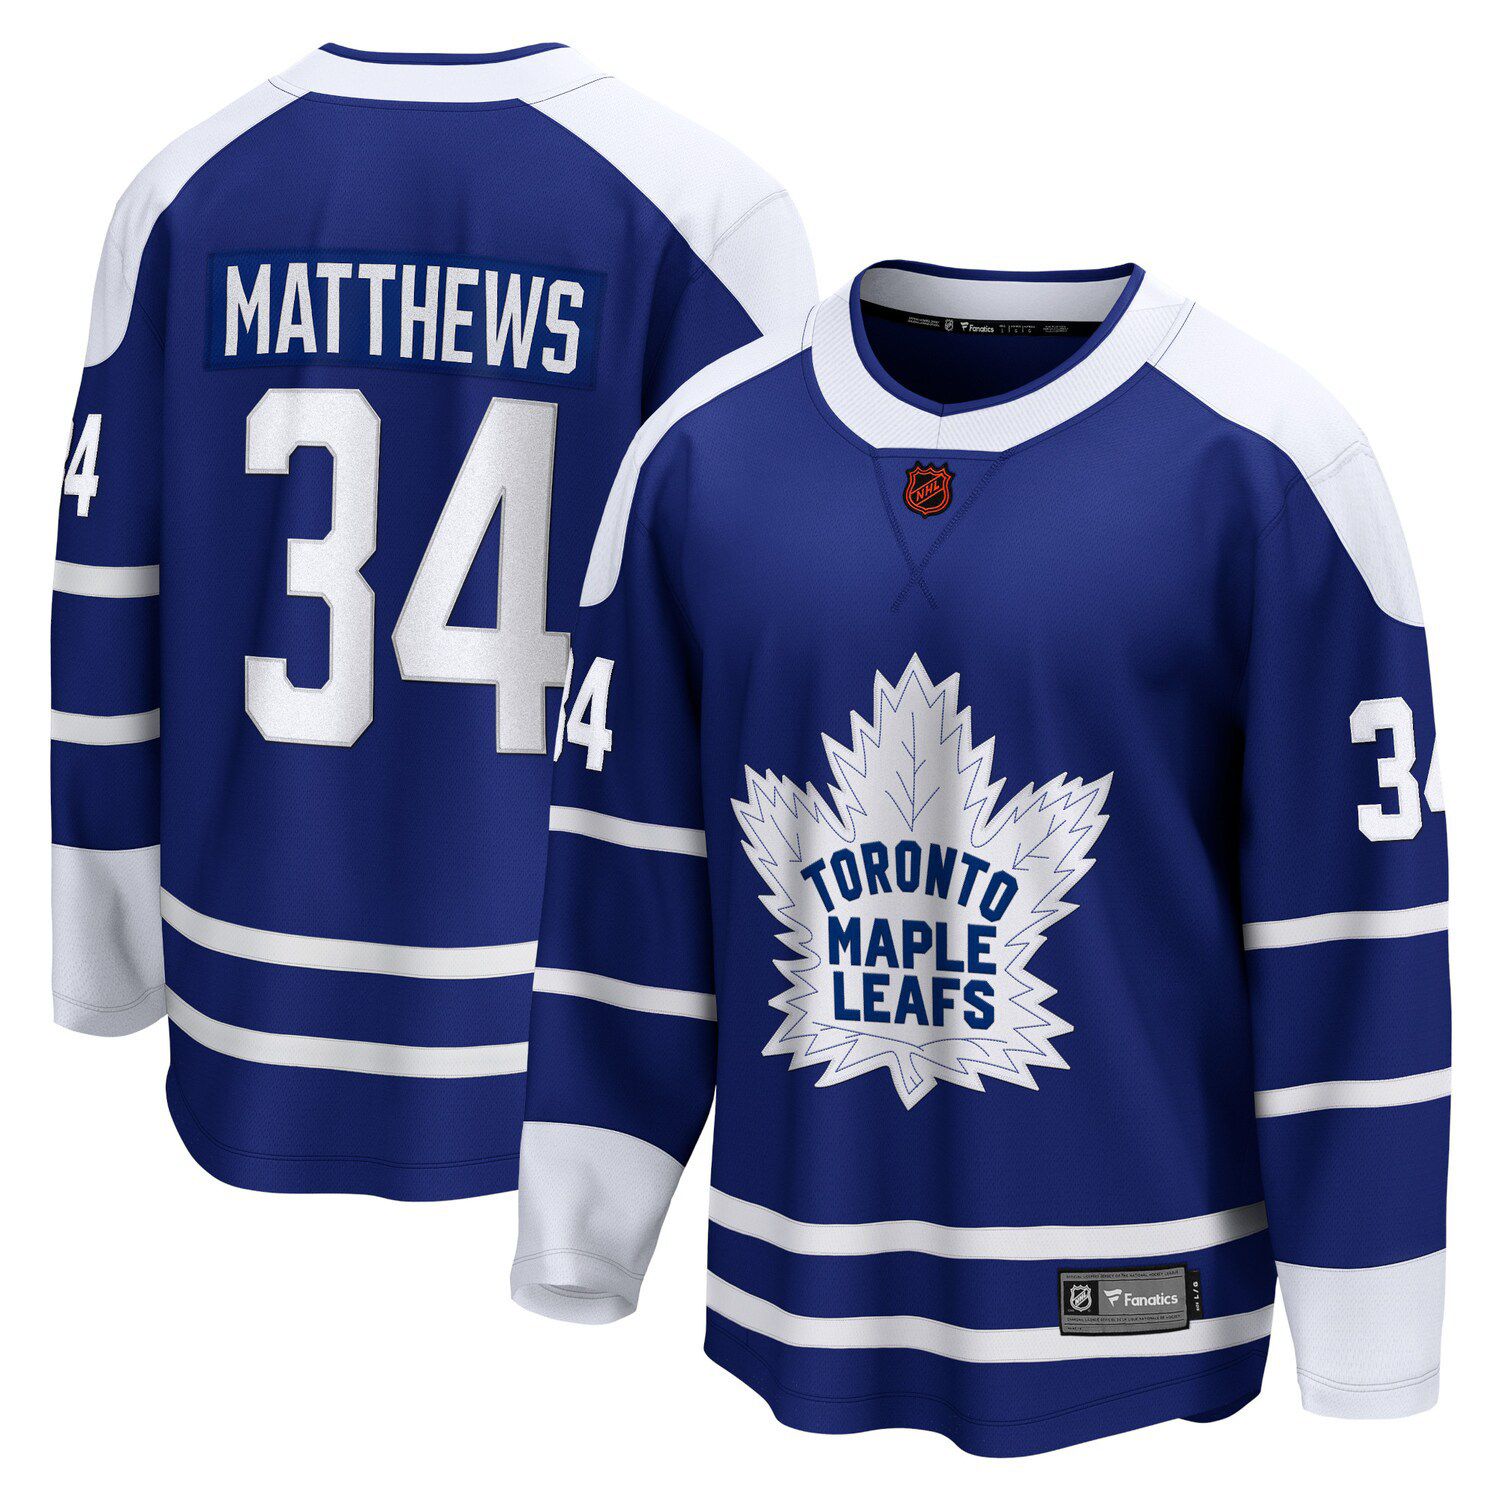 Fanatics Toronto Maple Leafs Replica Home Jersey - Adult